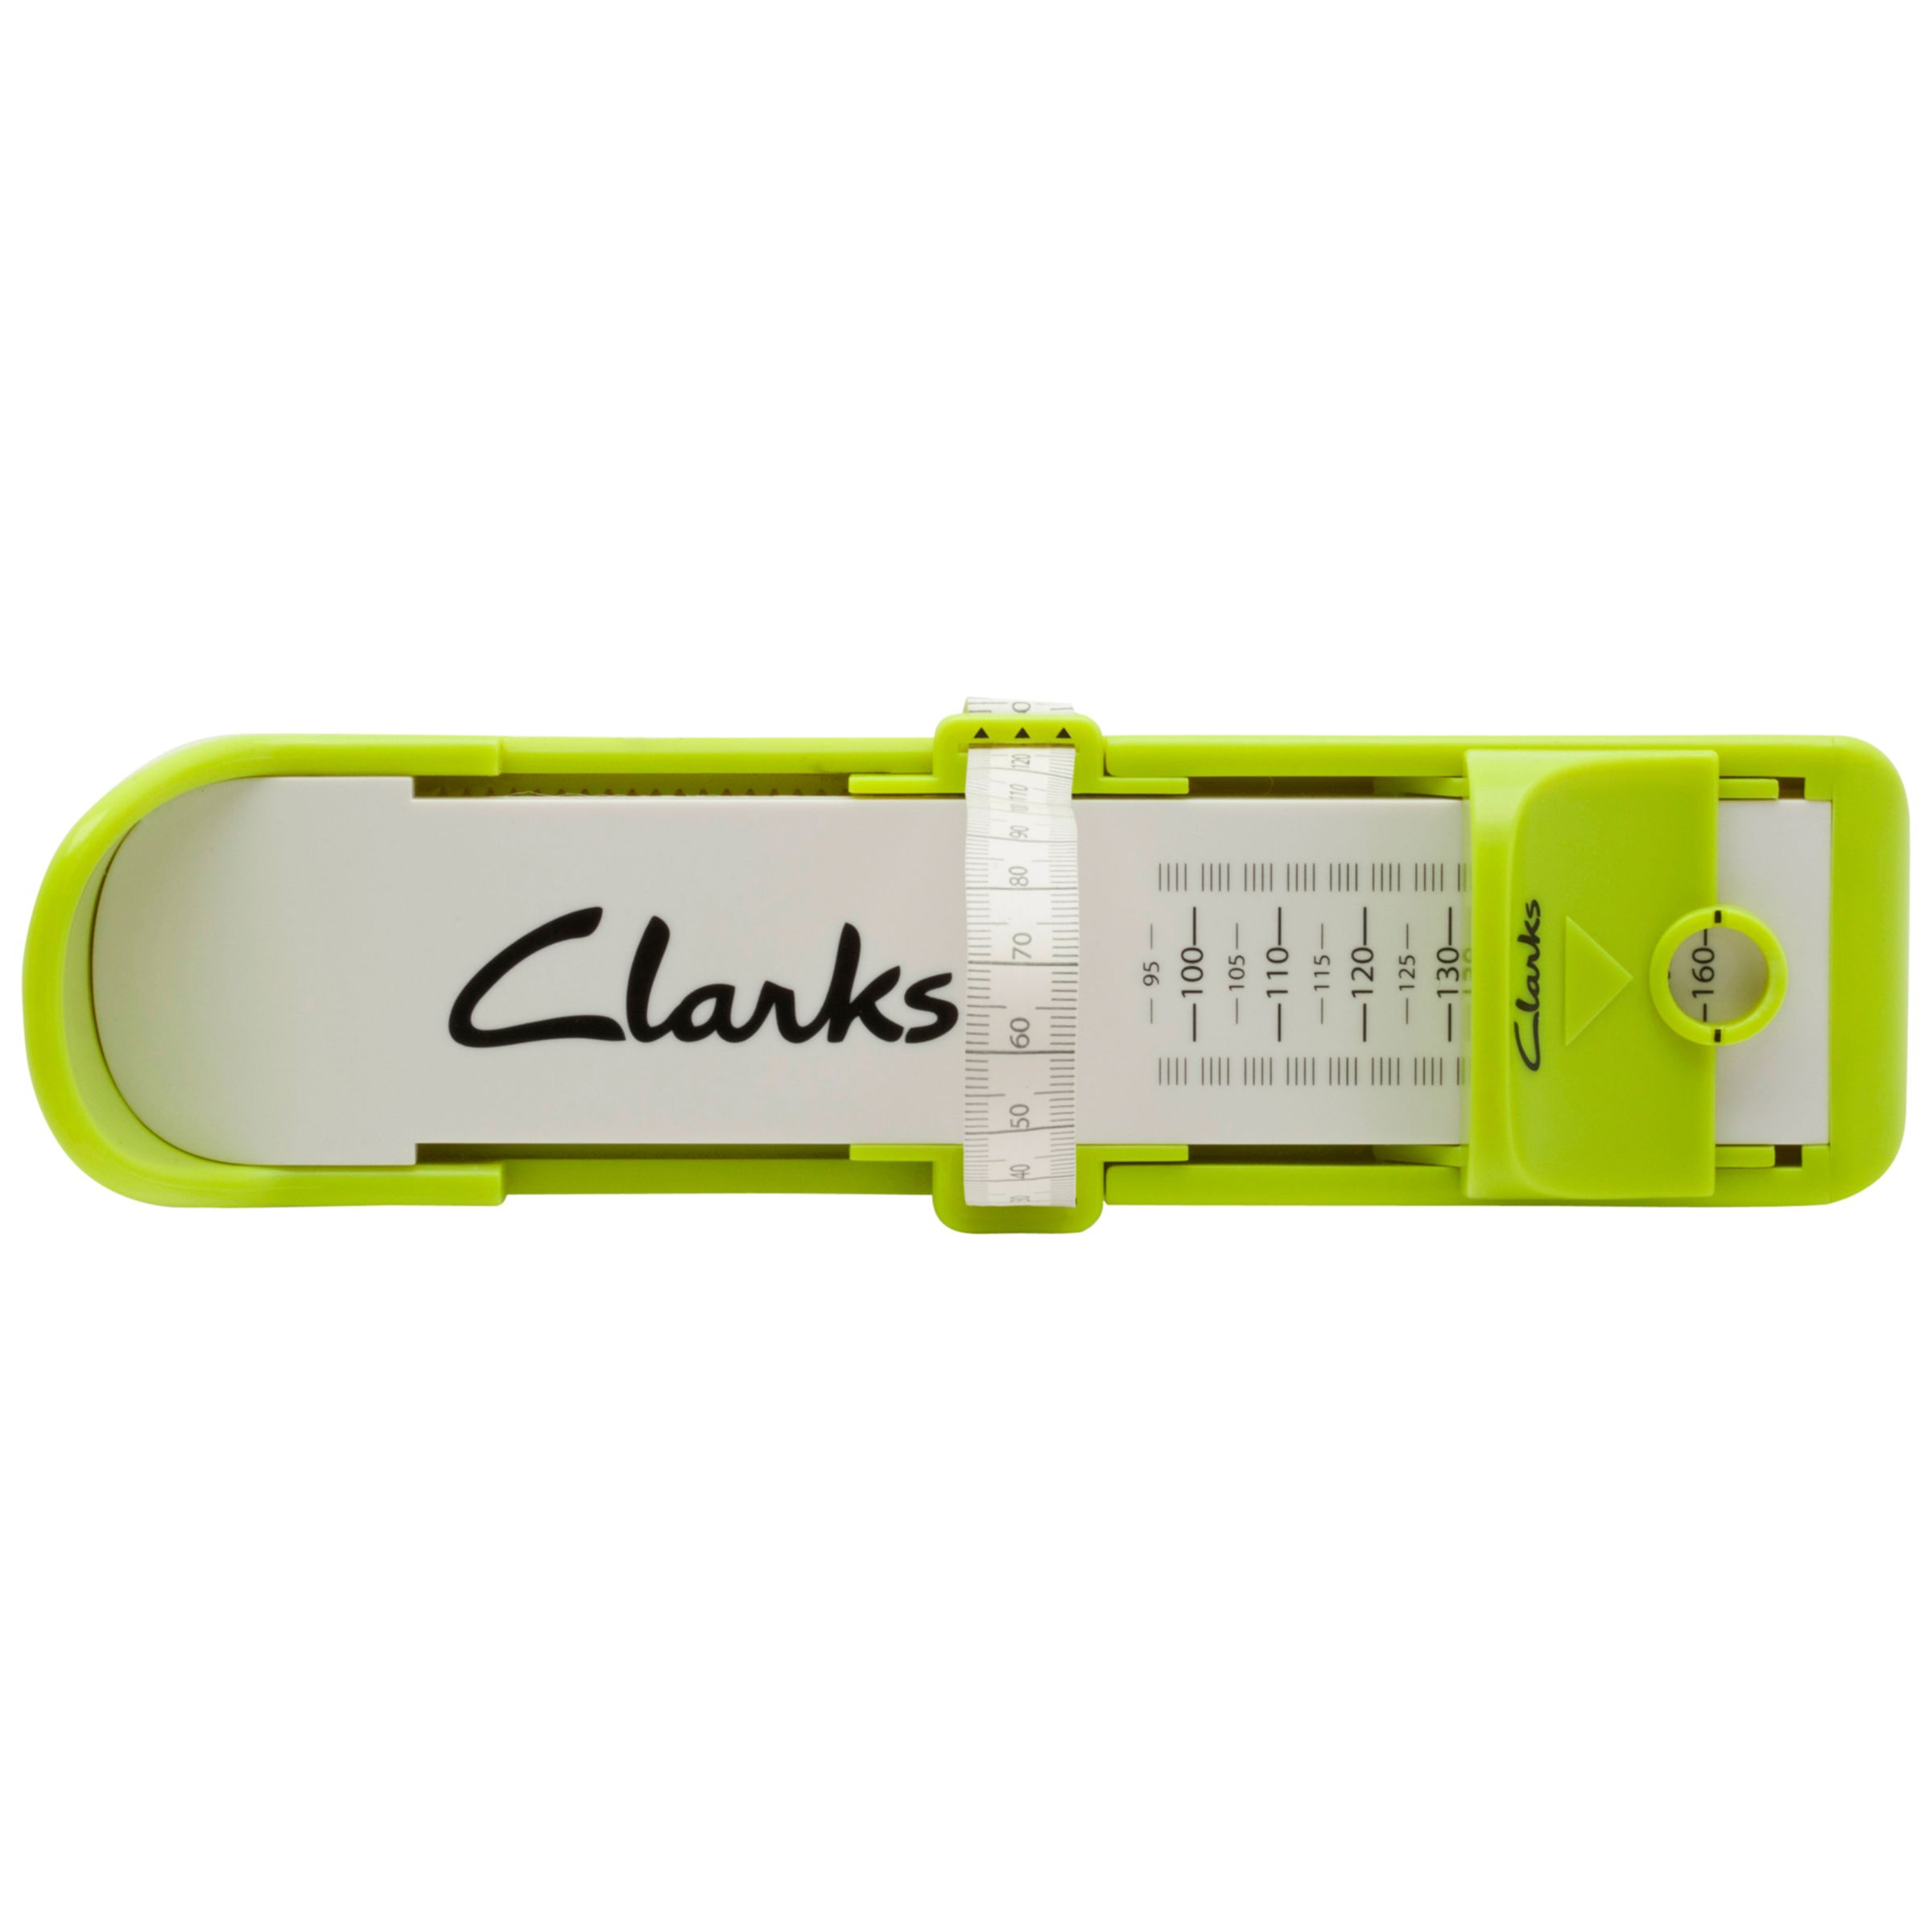 clarks size gauge